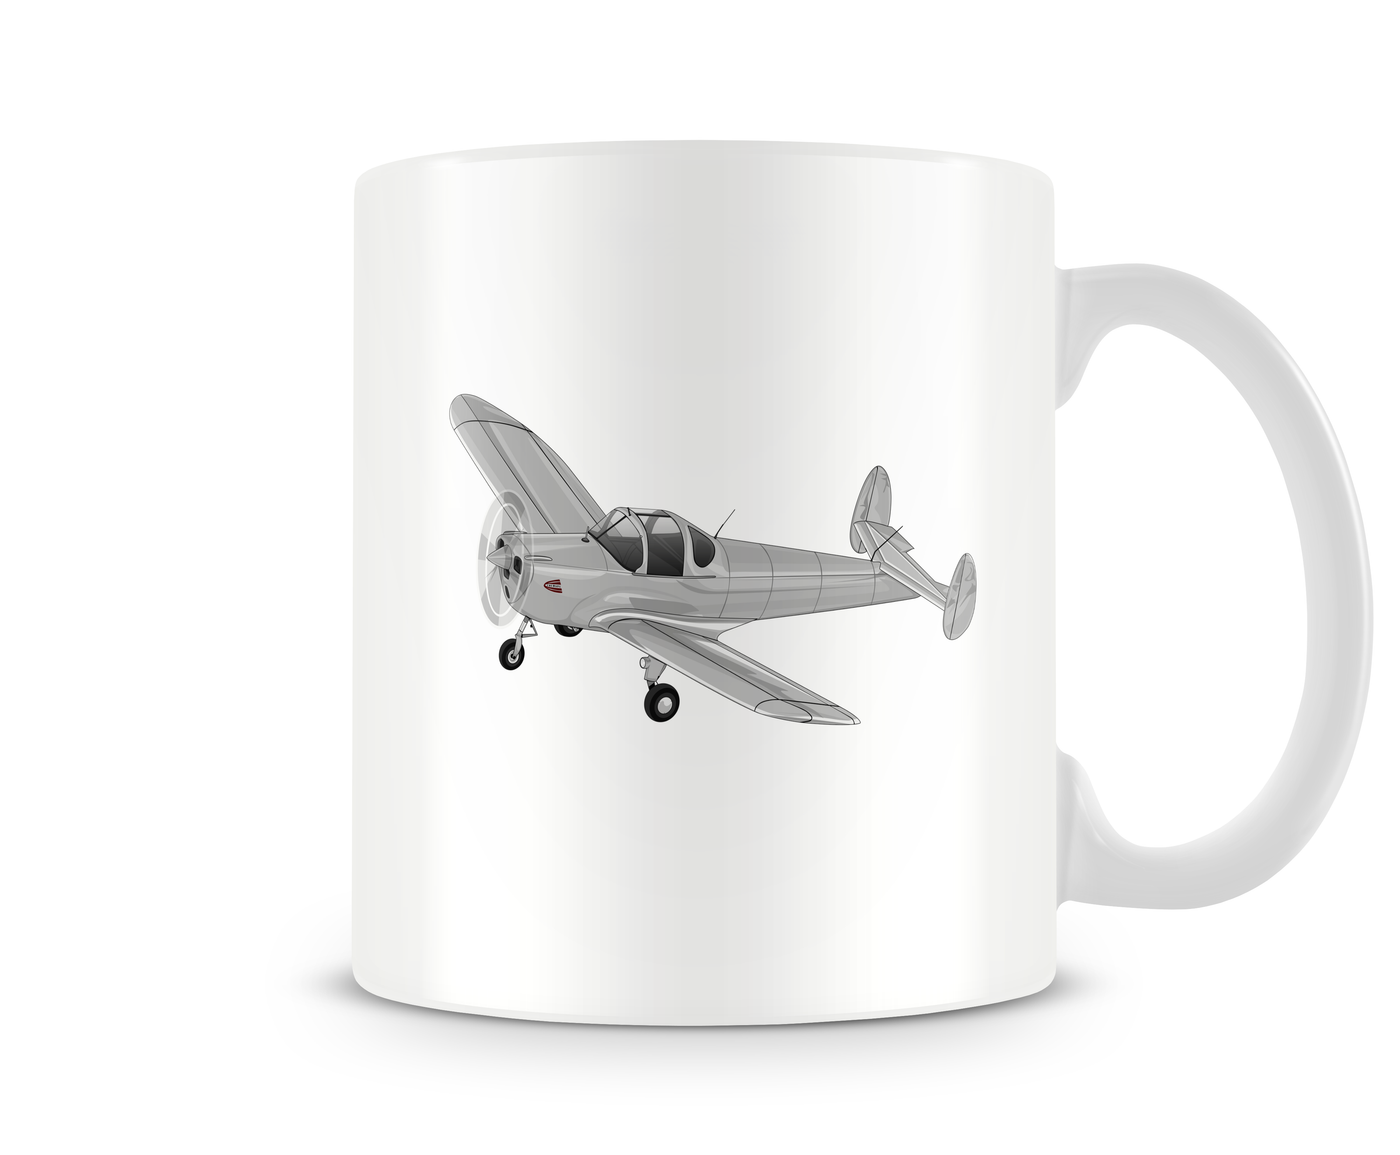 ERCO Ercoupe 415-CD Mug - Aircraft Mugs